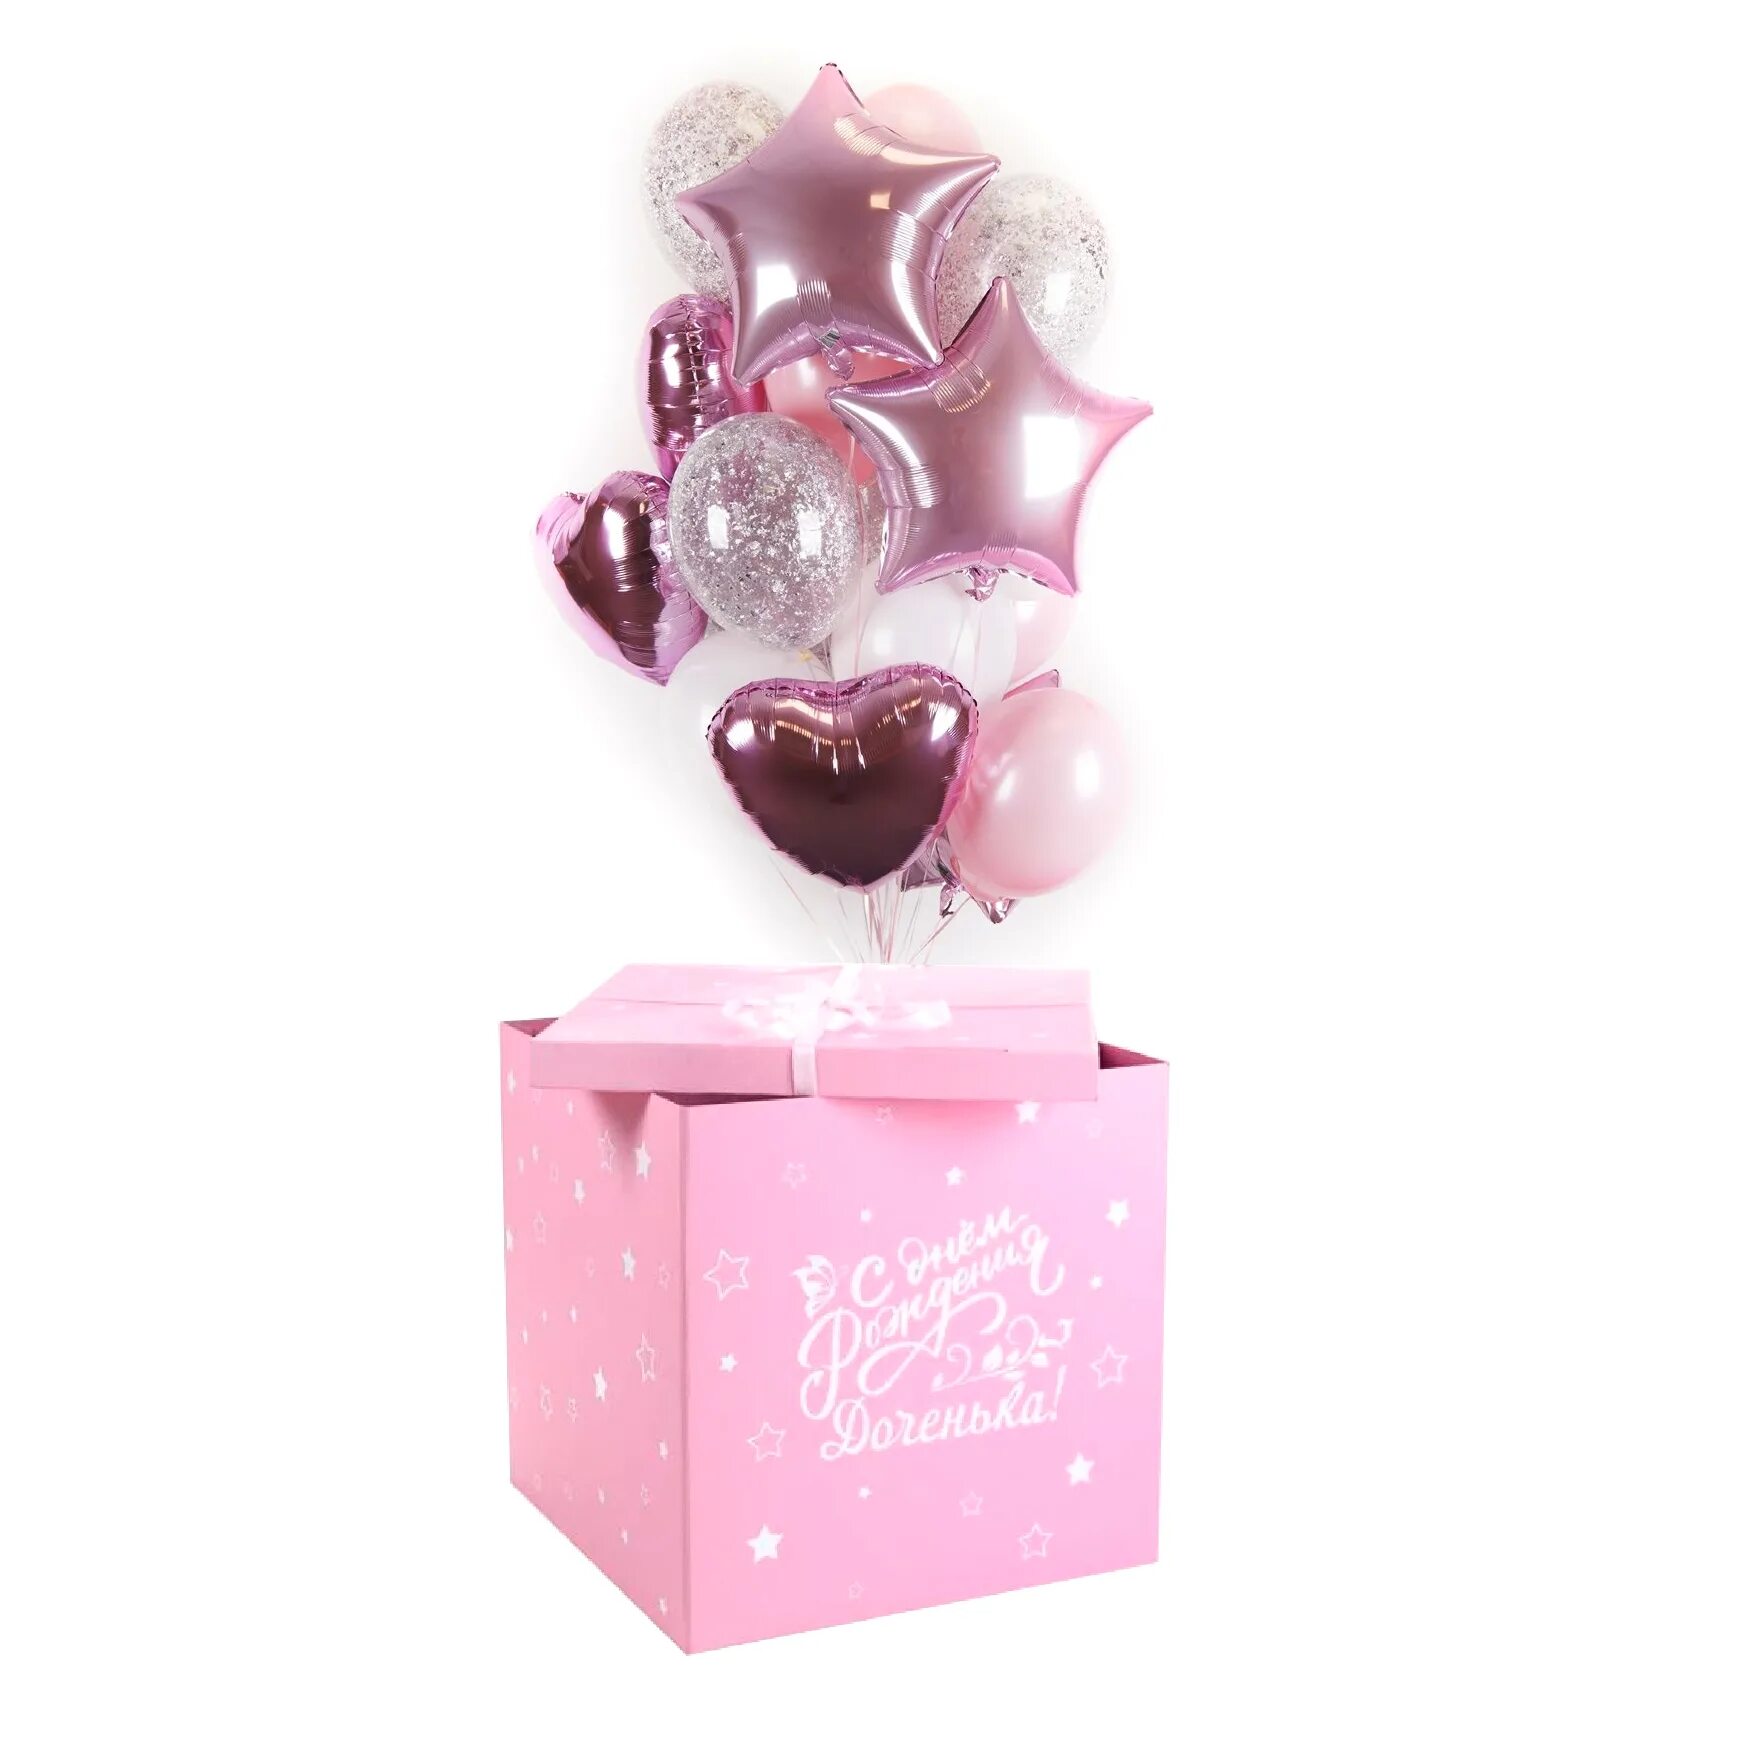 Коробка с шарами. Коробка с шарами для девочки. Коробка сюрприз с шарами для девочки. Розовая коробка сюрприз с шарами.